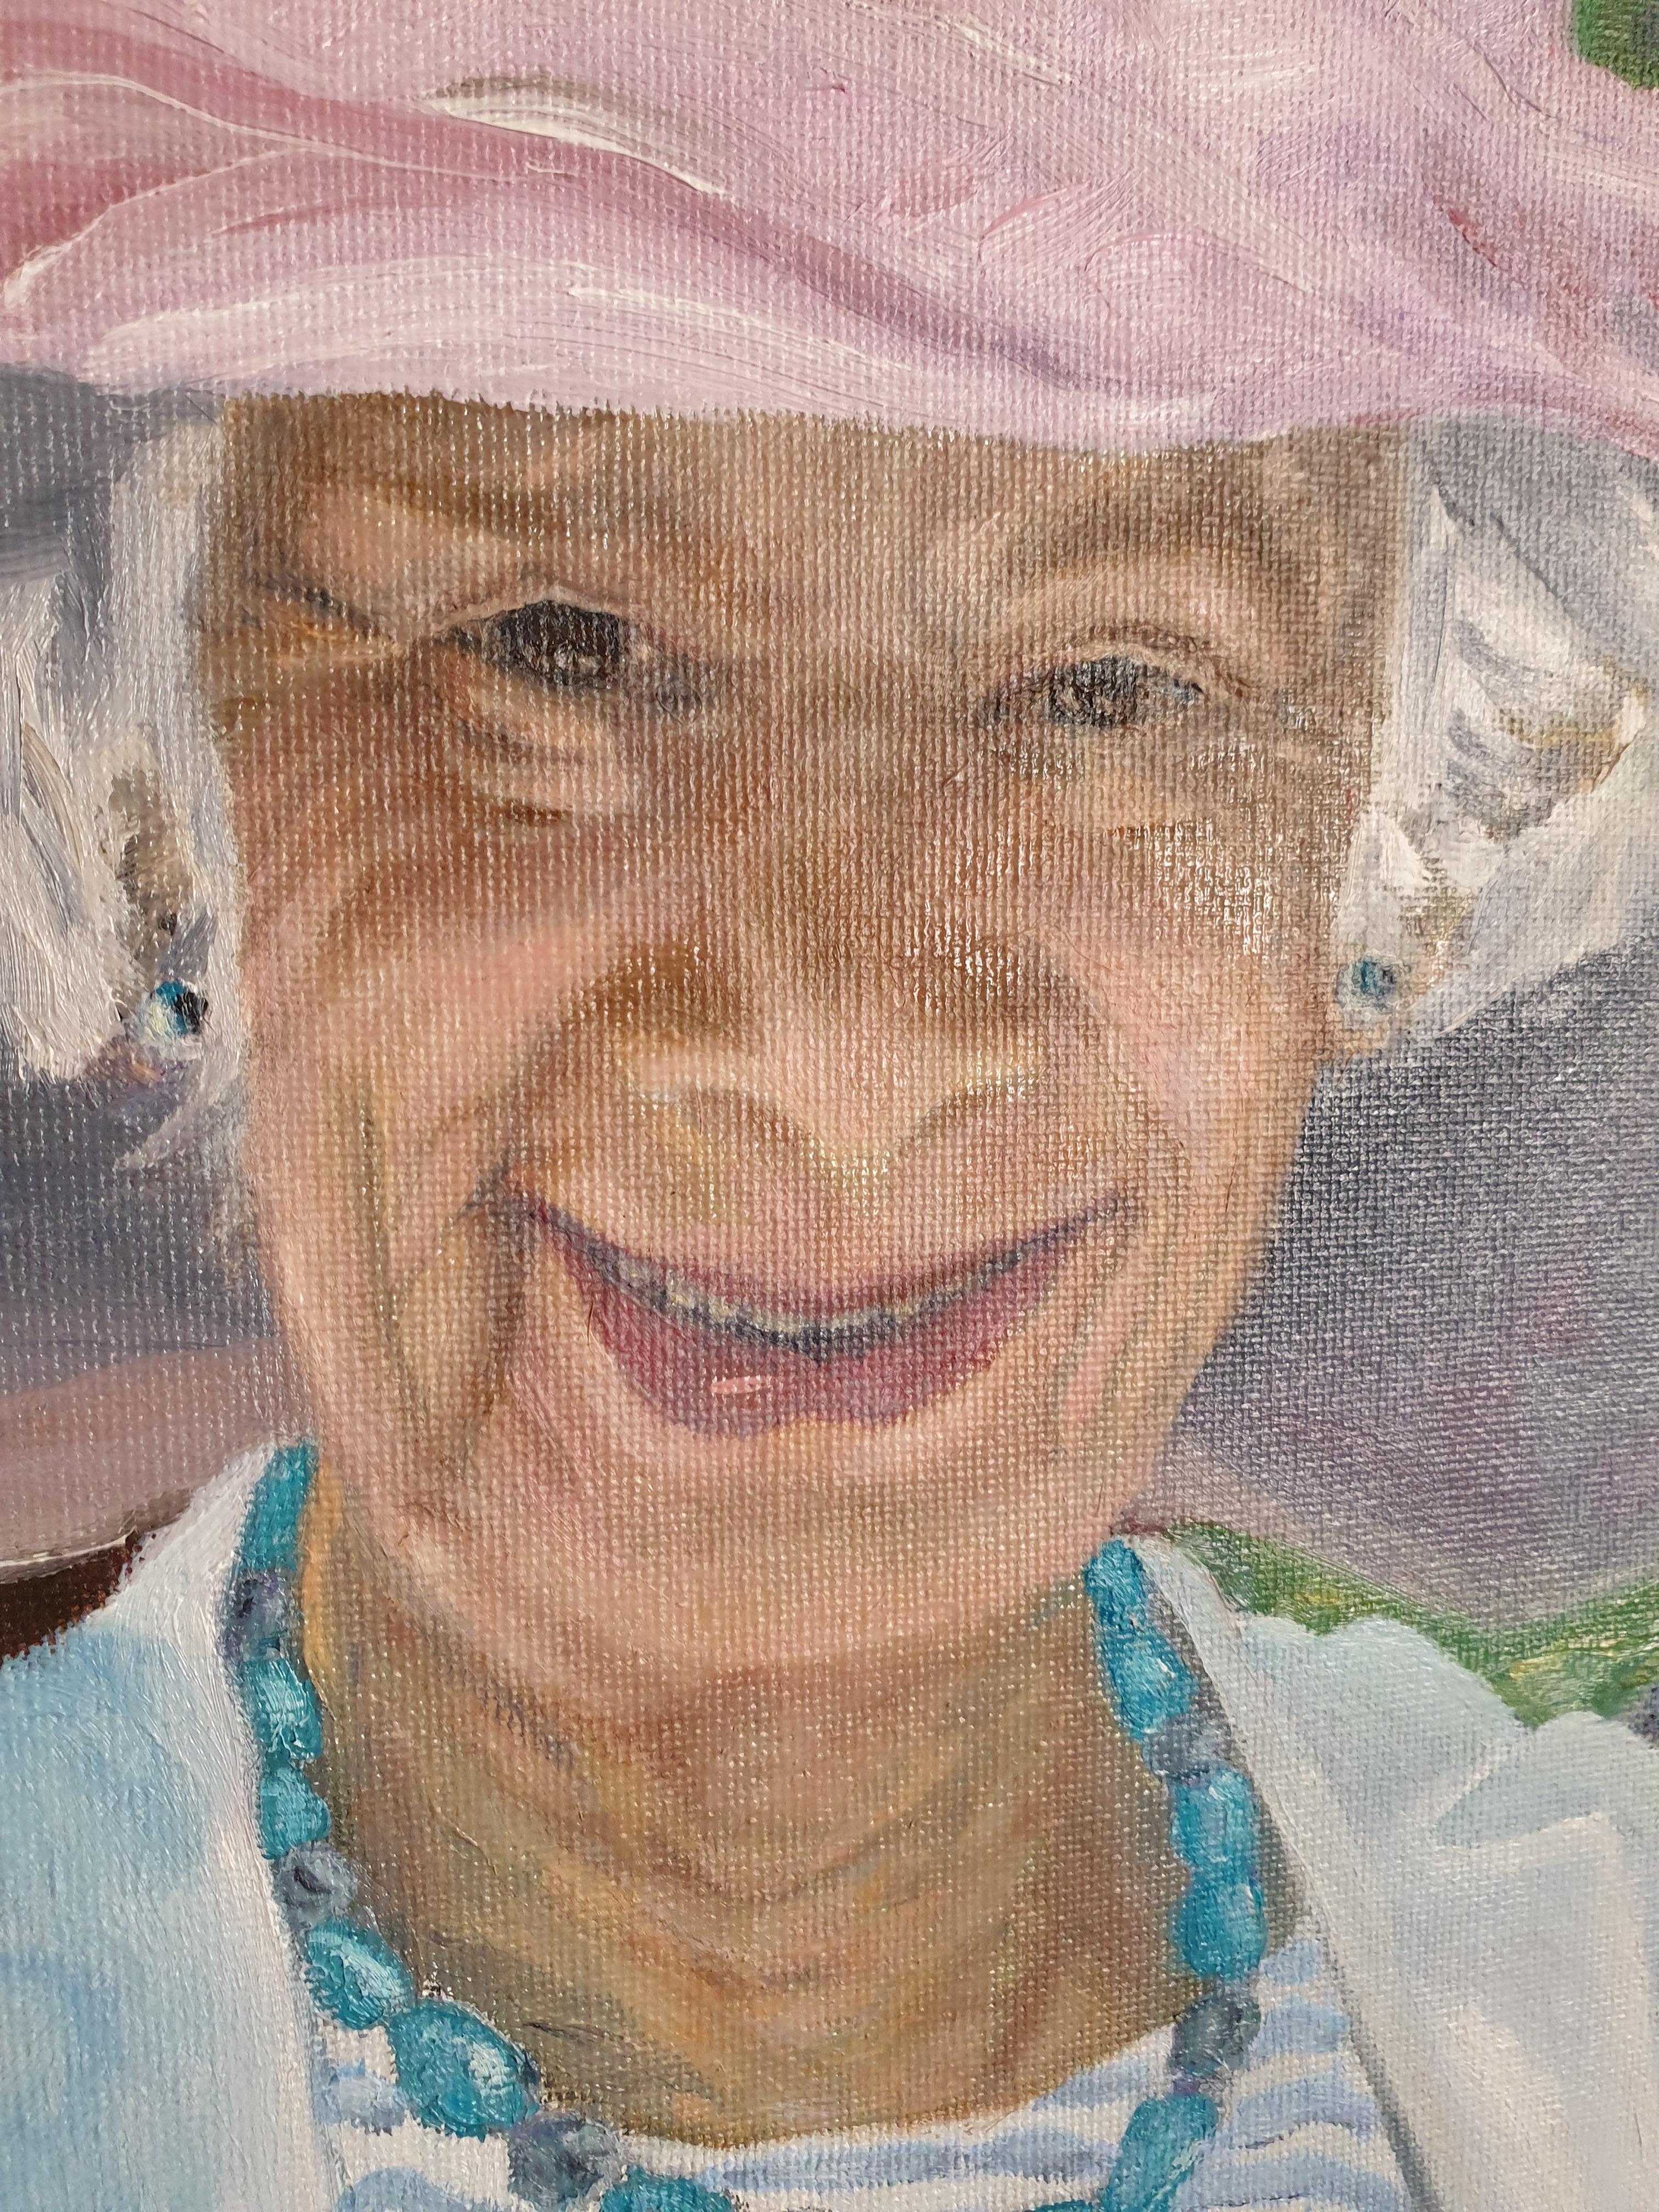 Cora. Contemporary Portrait in Oil on Linen Covered Board. For Sale 7